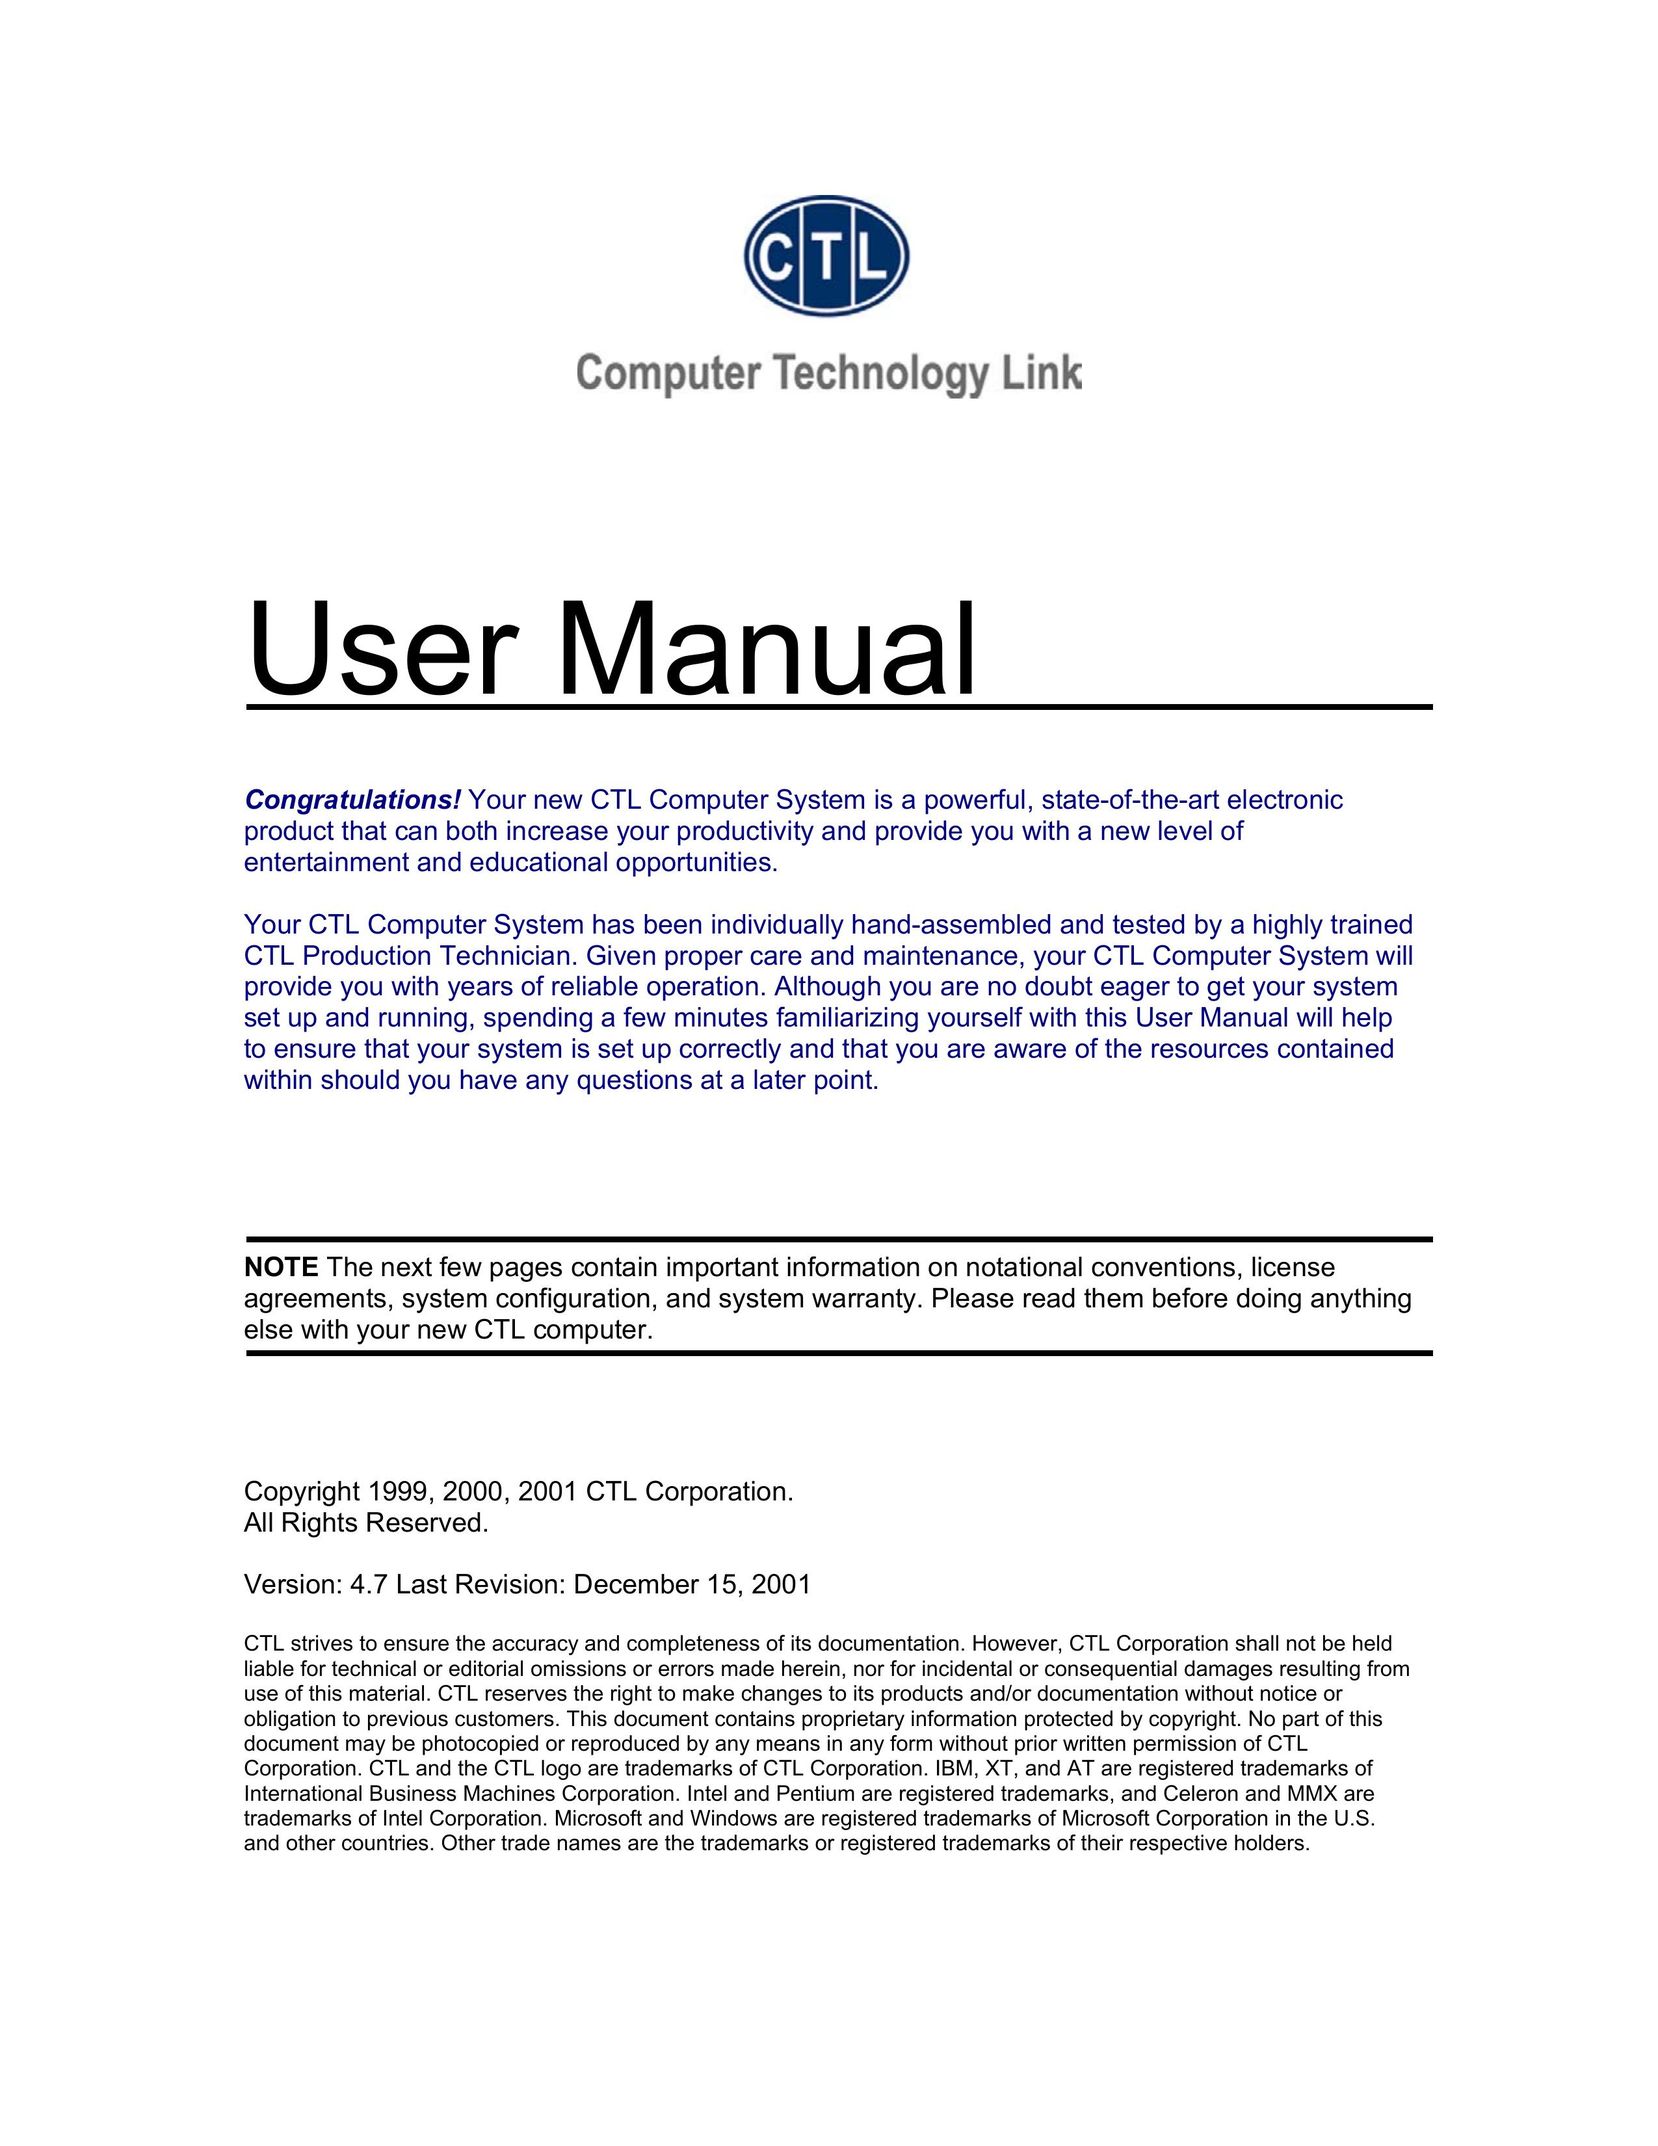 Computer Tech Link Valeo Personal Computer User Manual